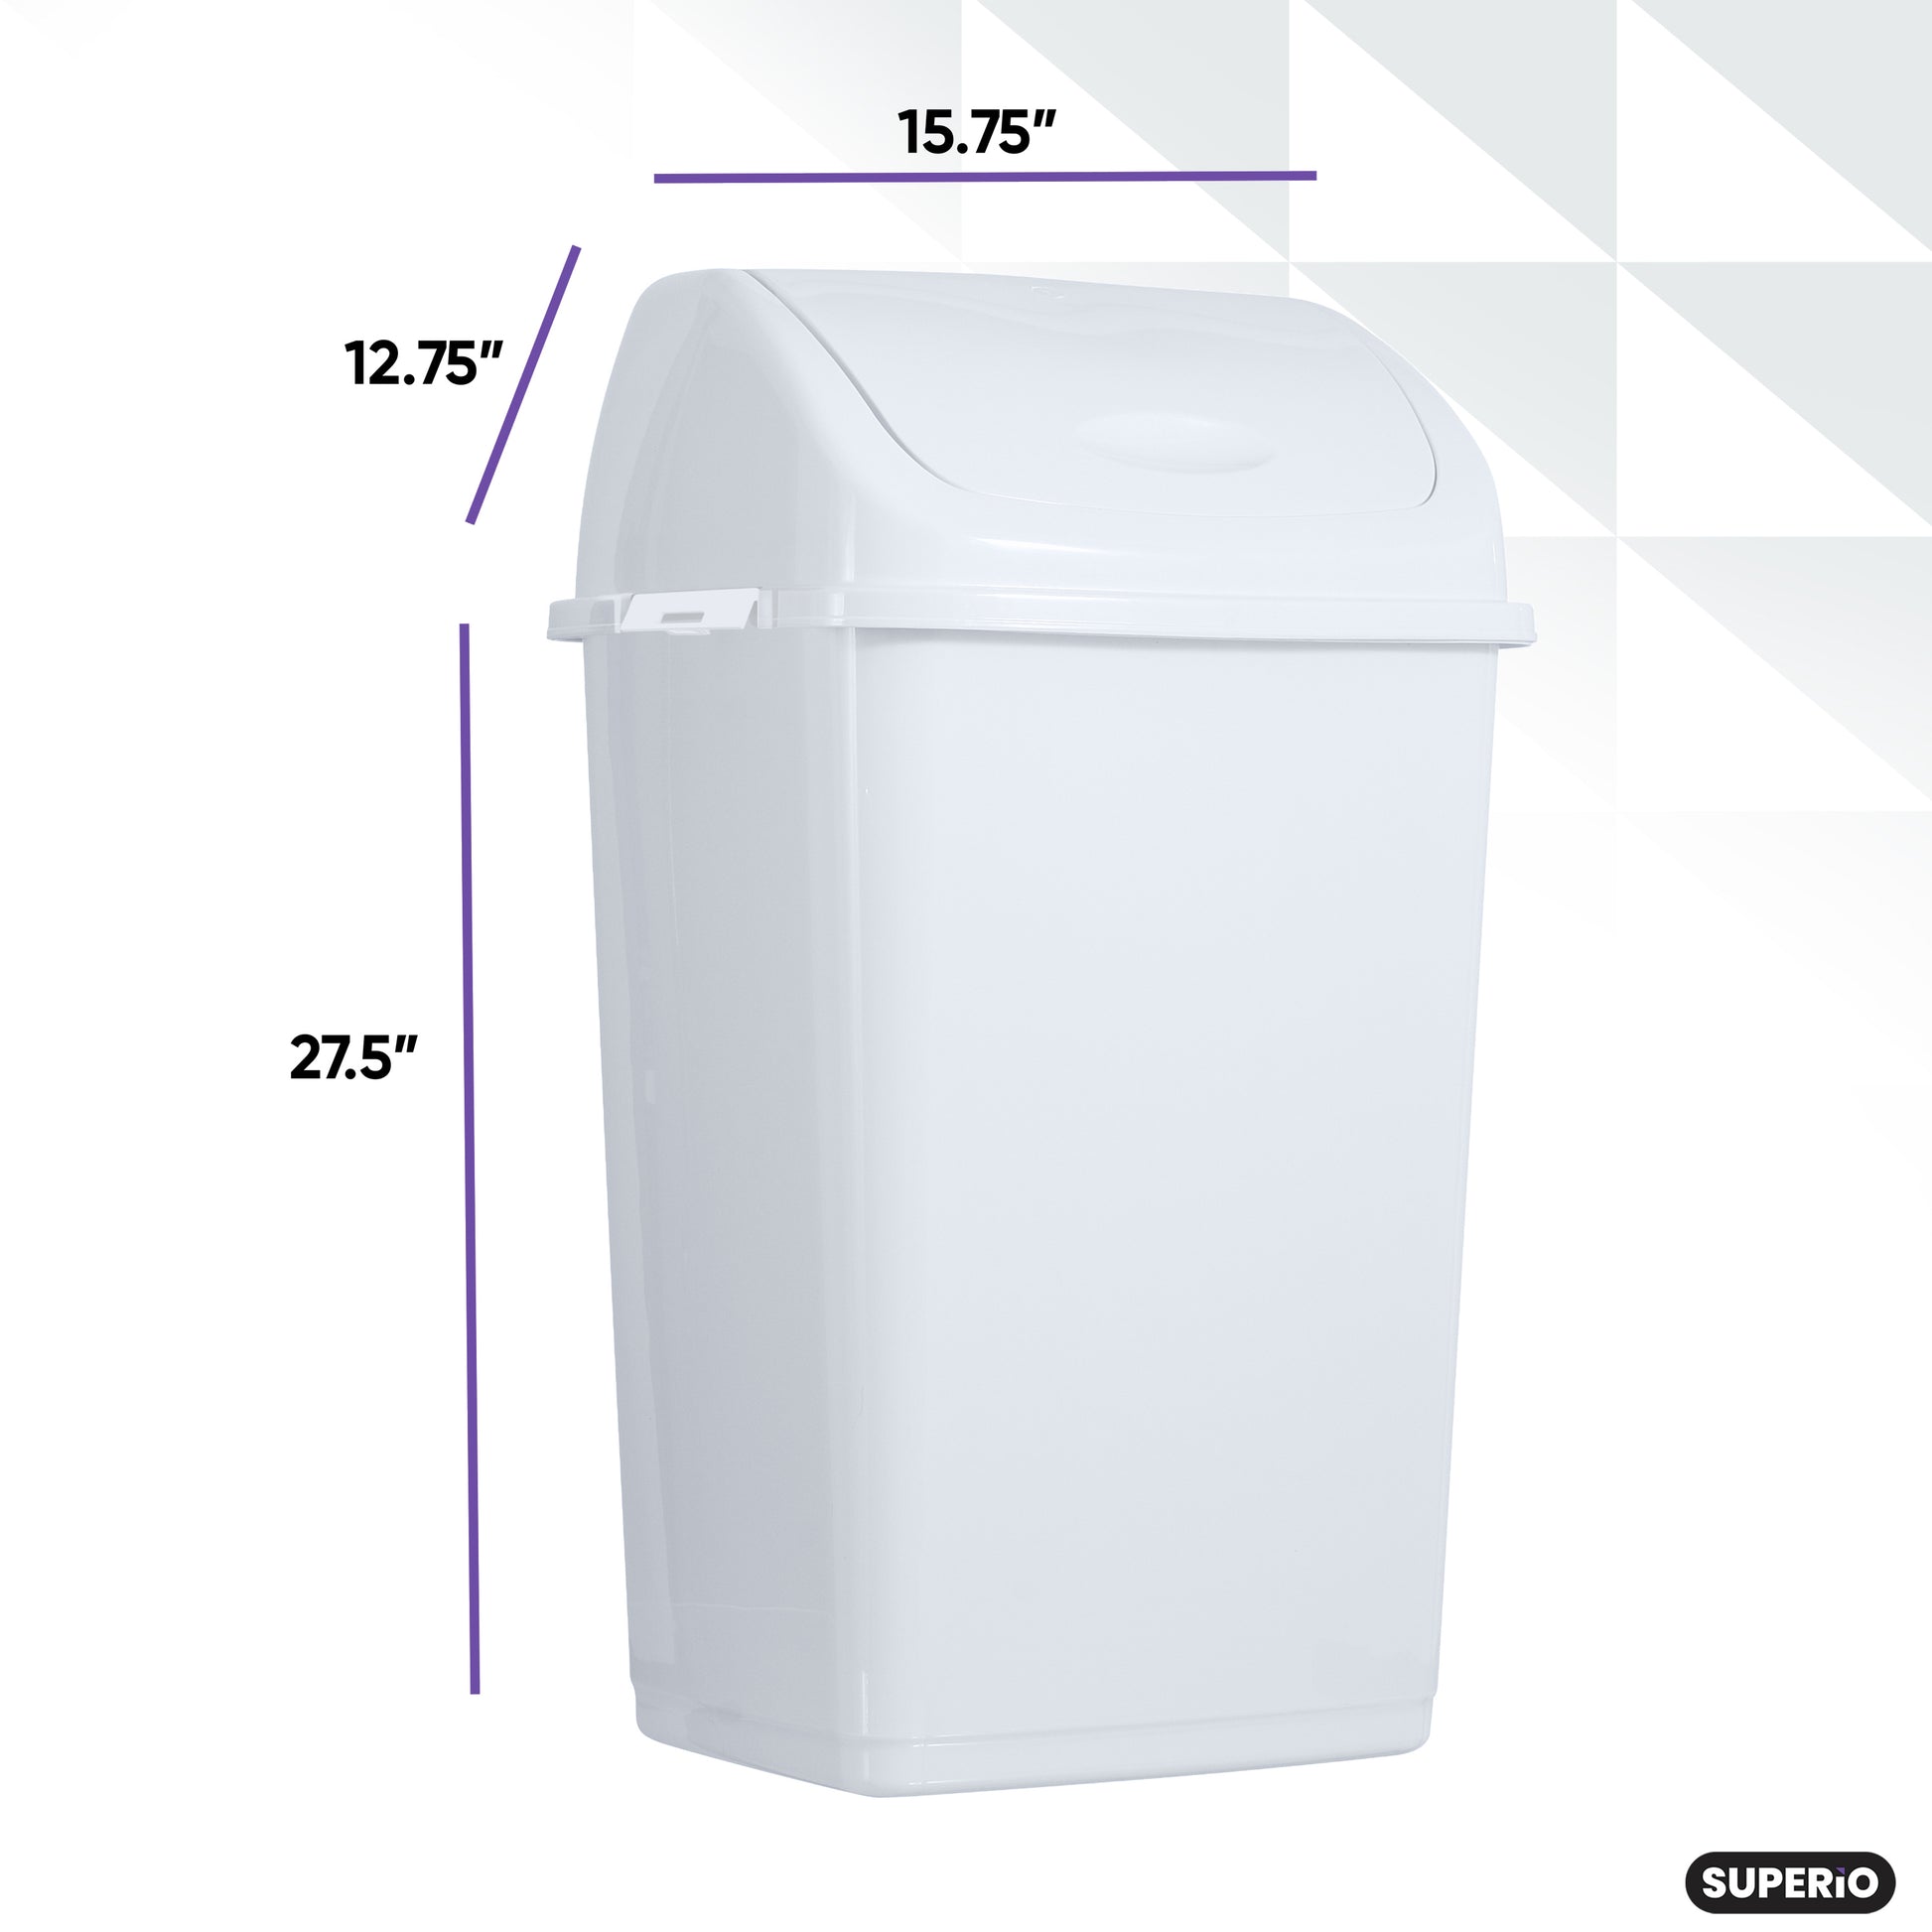 Superio Plastic 13 Gallon Swing Top Trash Can & Reviews